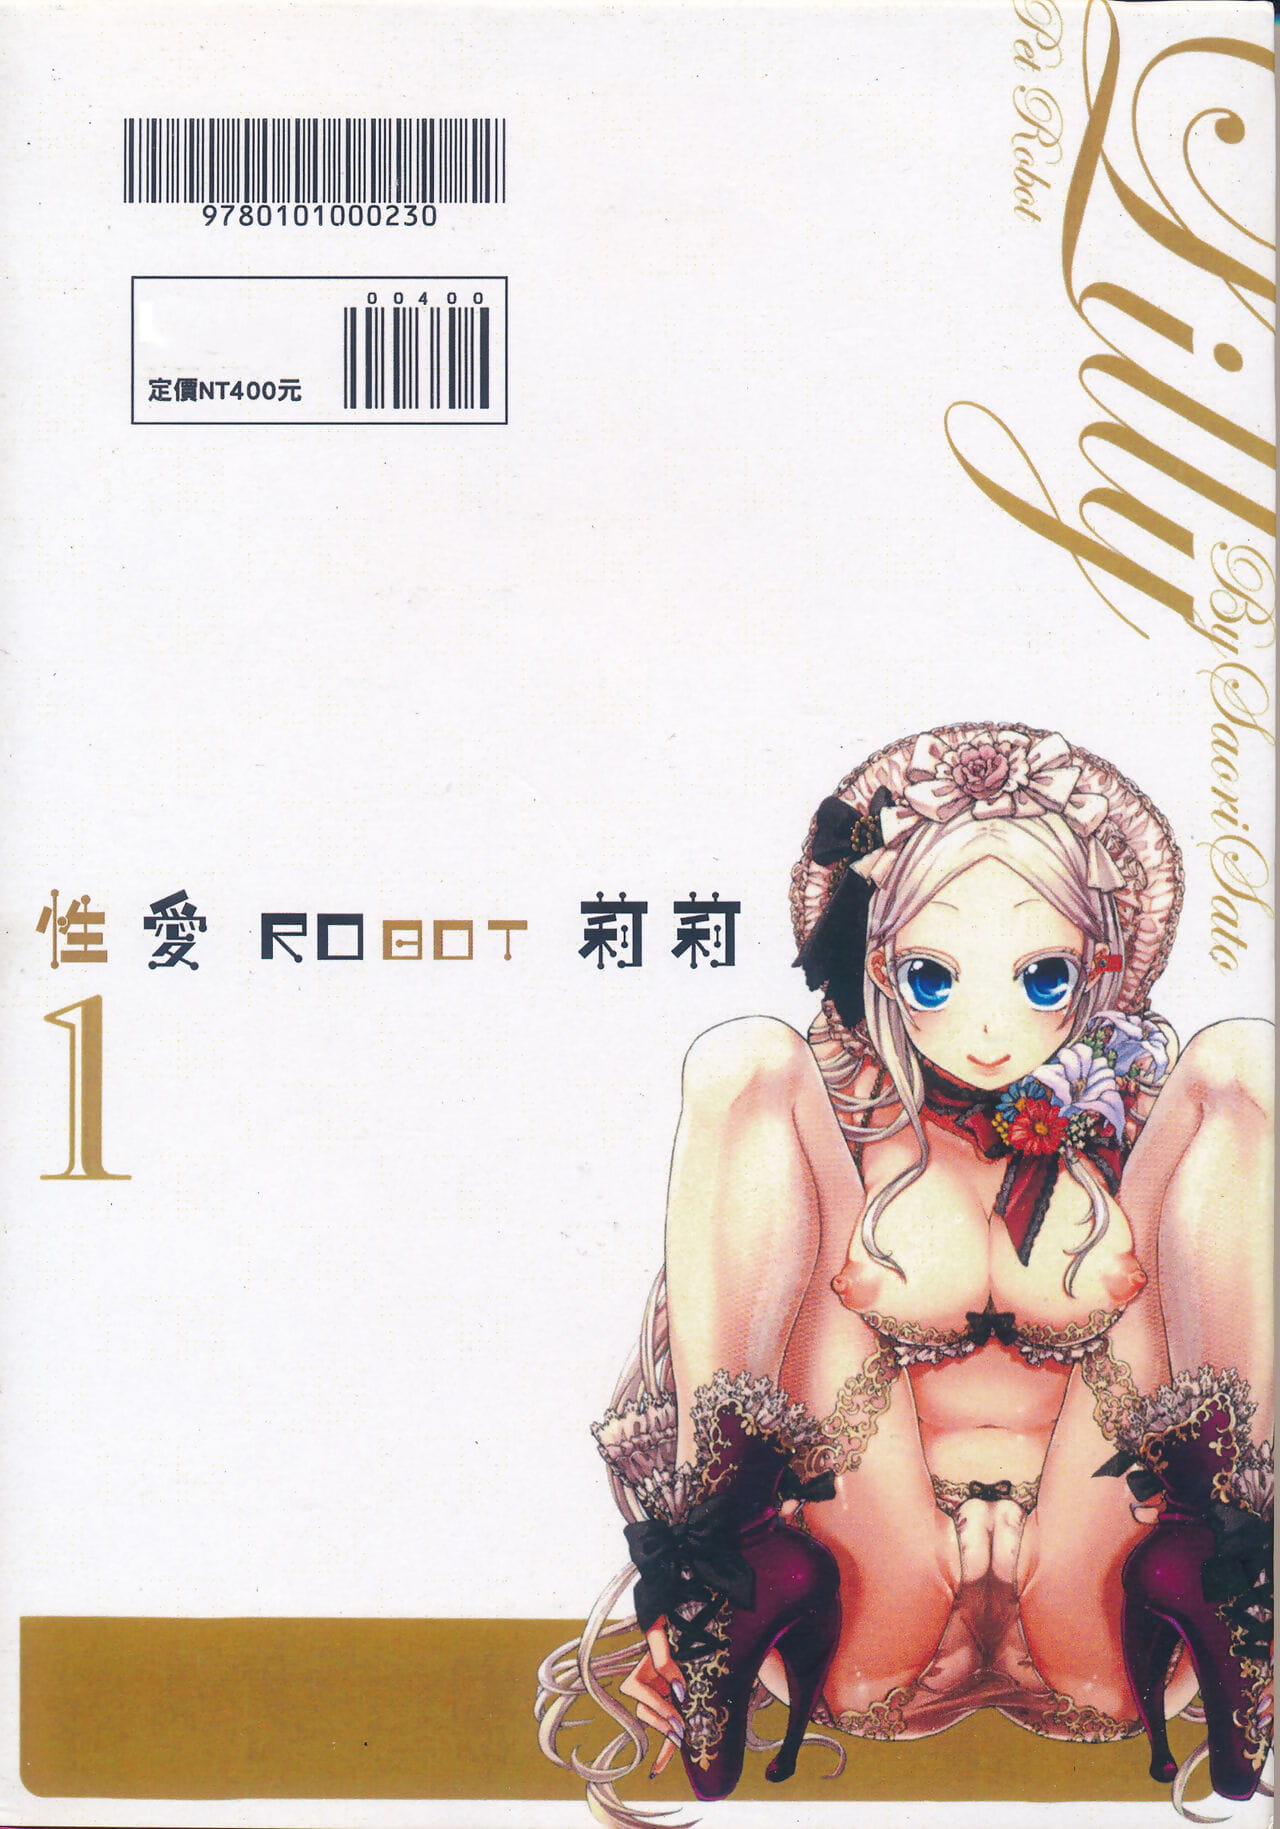 Satou Saori Aigan robot Lilly mascota robot Lilly vol. 1 性愛robot 莉莉 vol. 1 Chino Parte 7